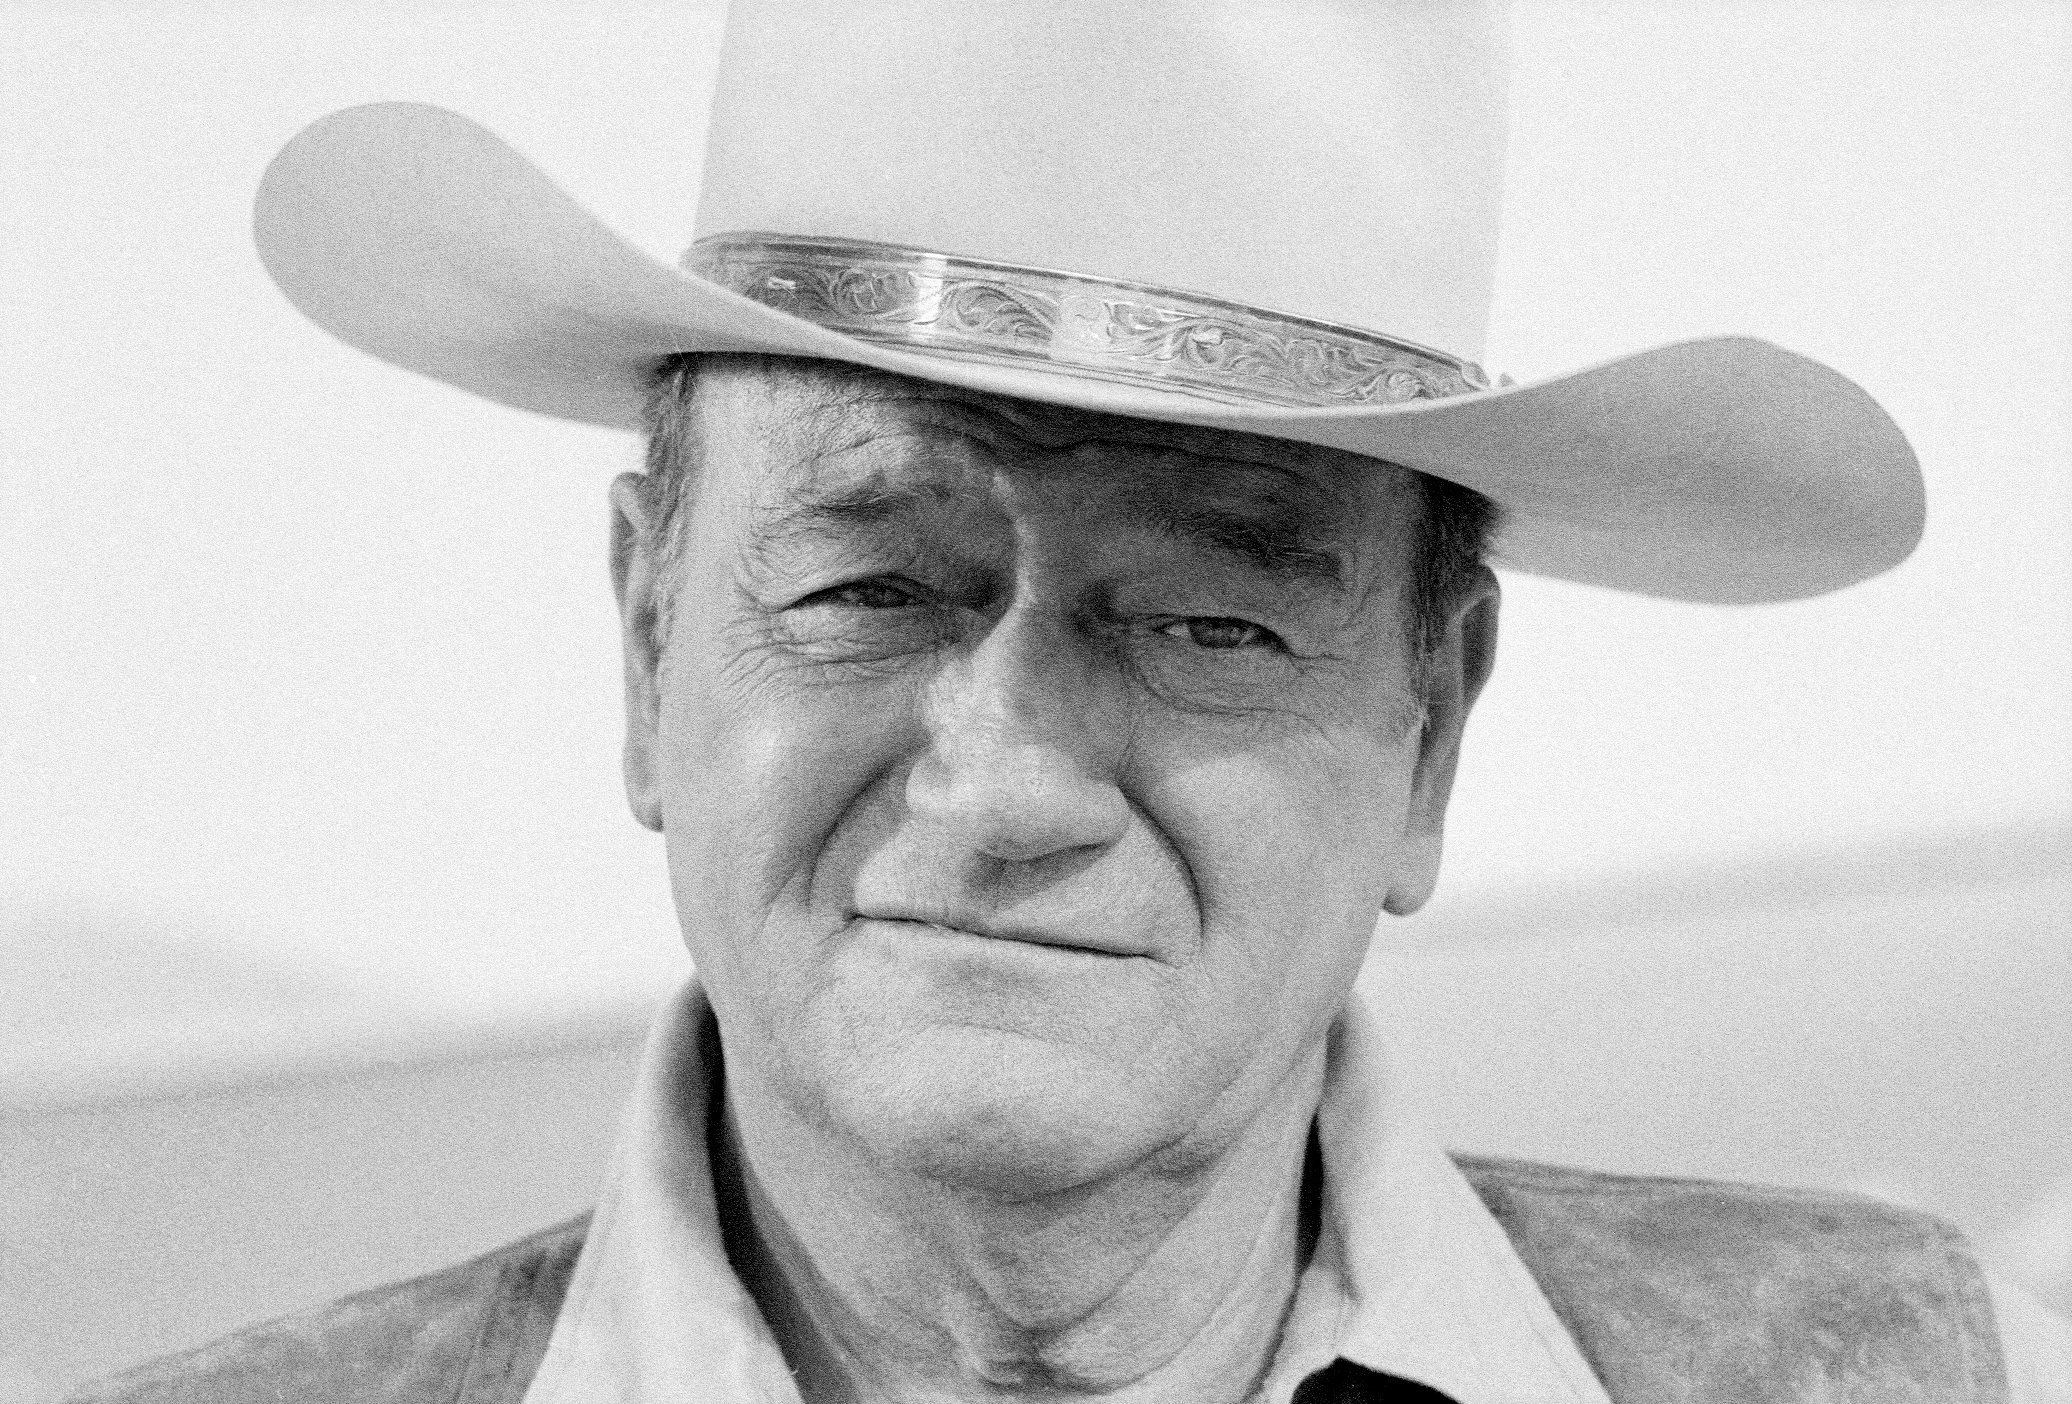 John Wayne wearing a cowboy hat